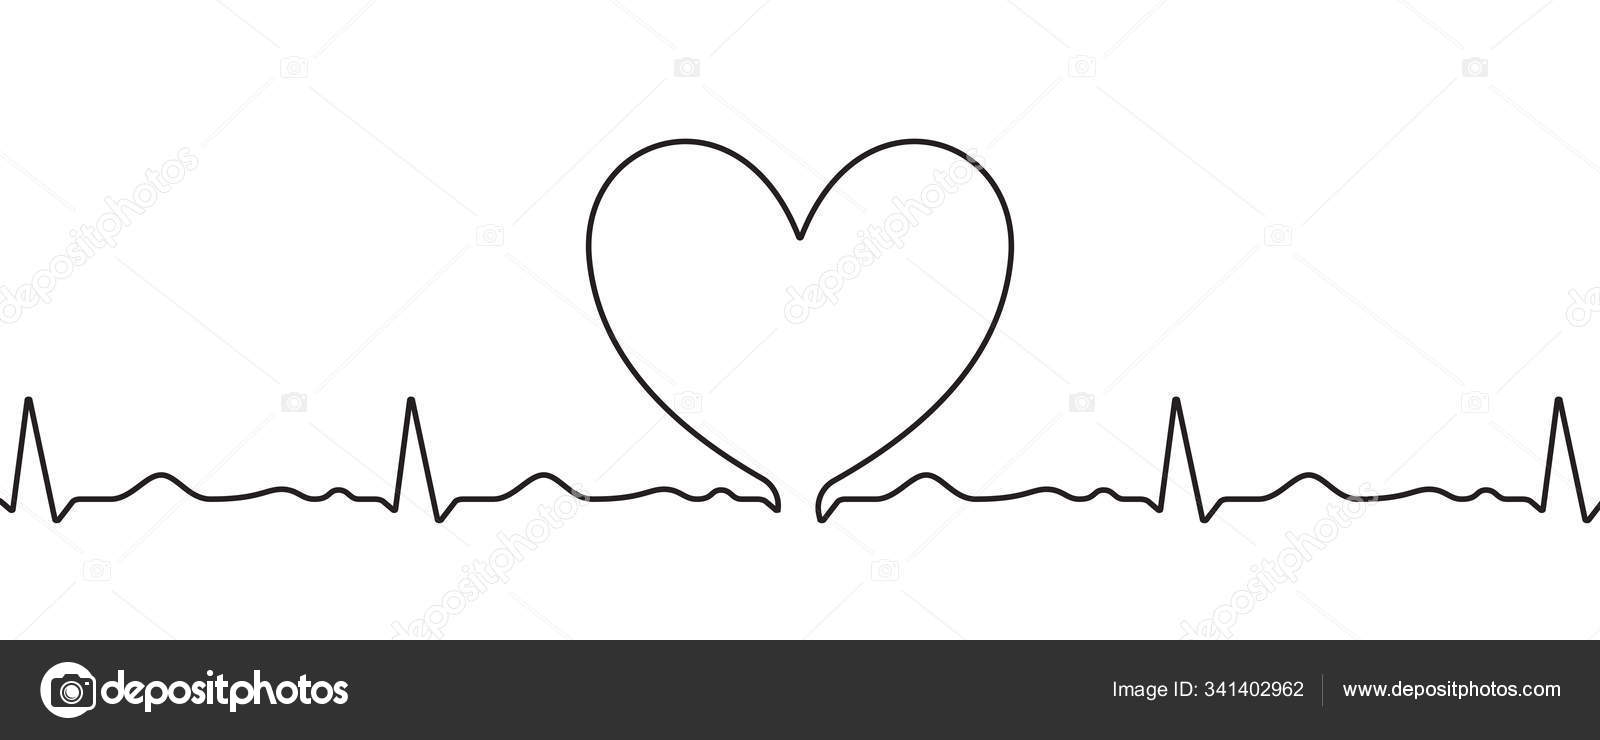 Love heart beat vector  Love heart drawing, Heart drawing, Cute easy  drawings